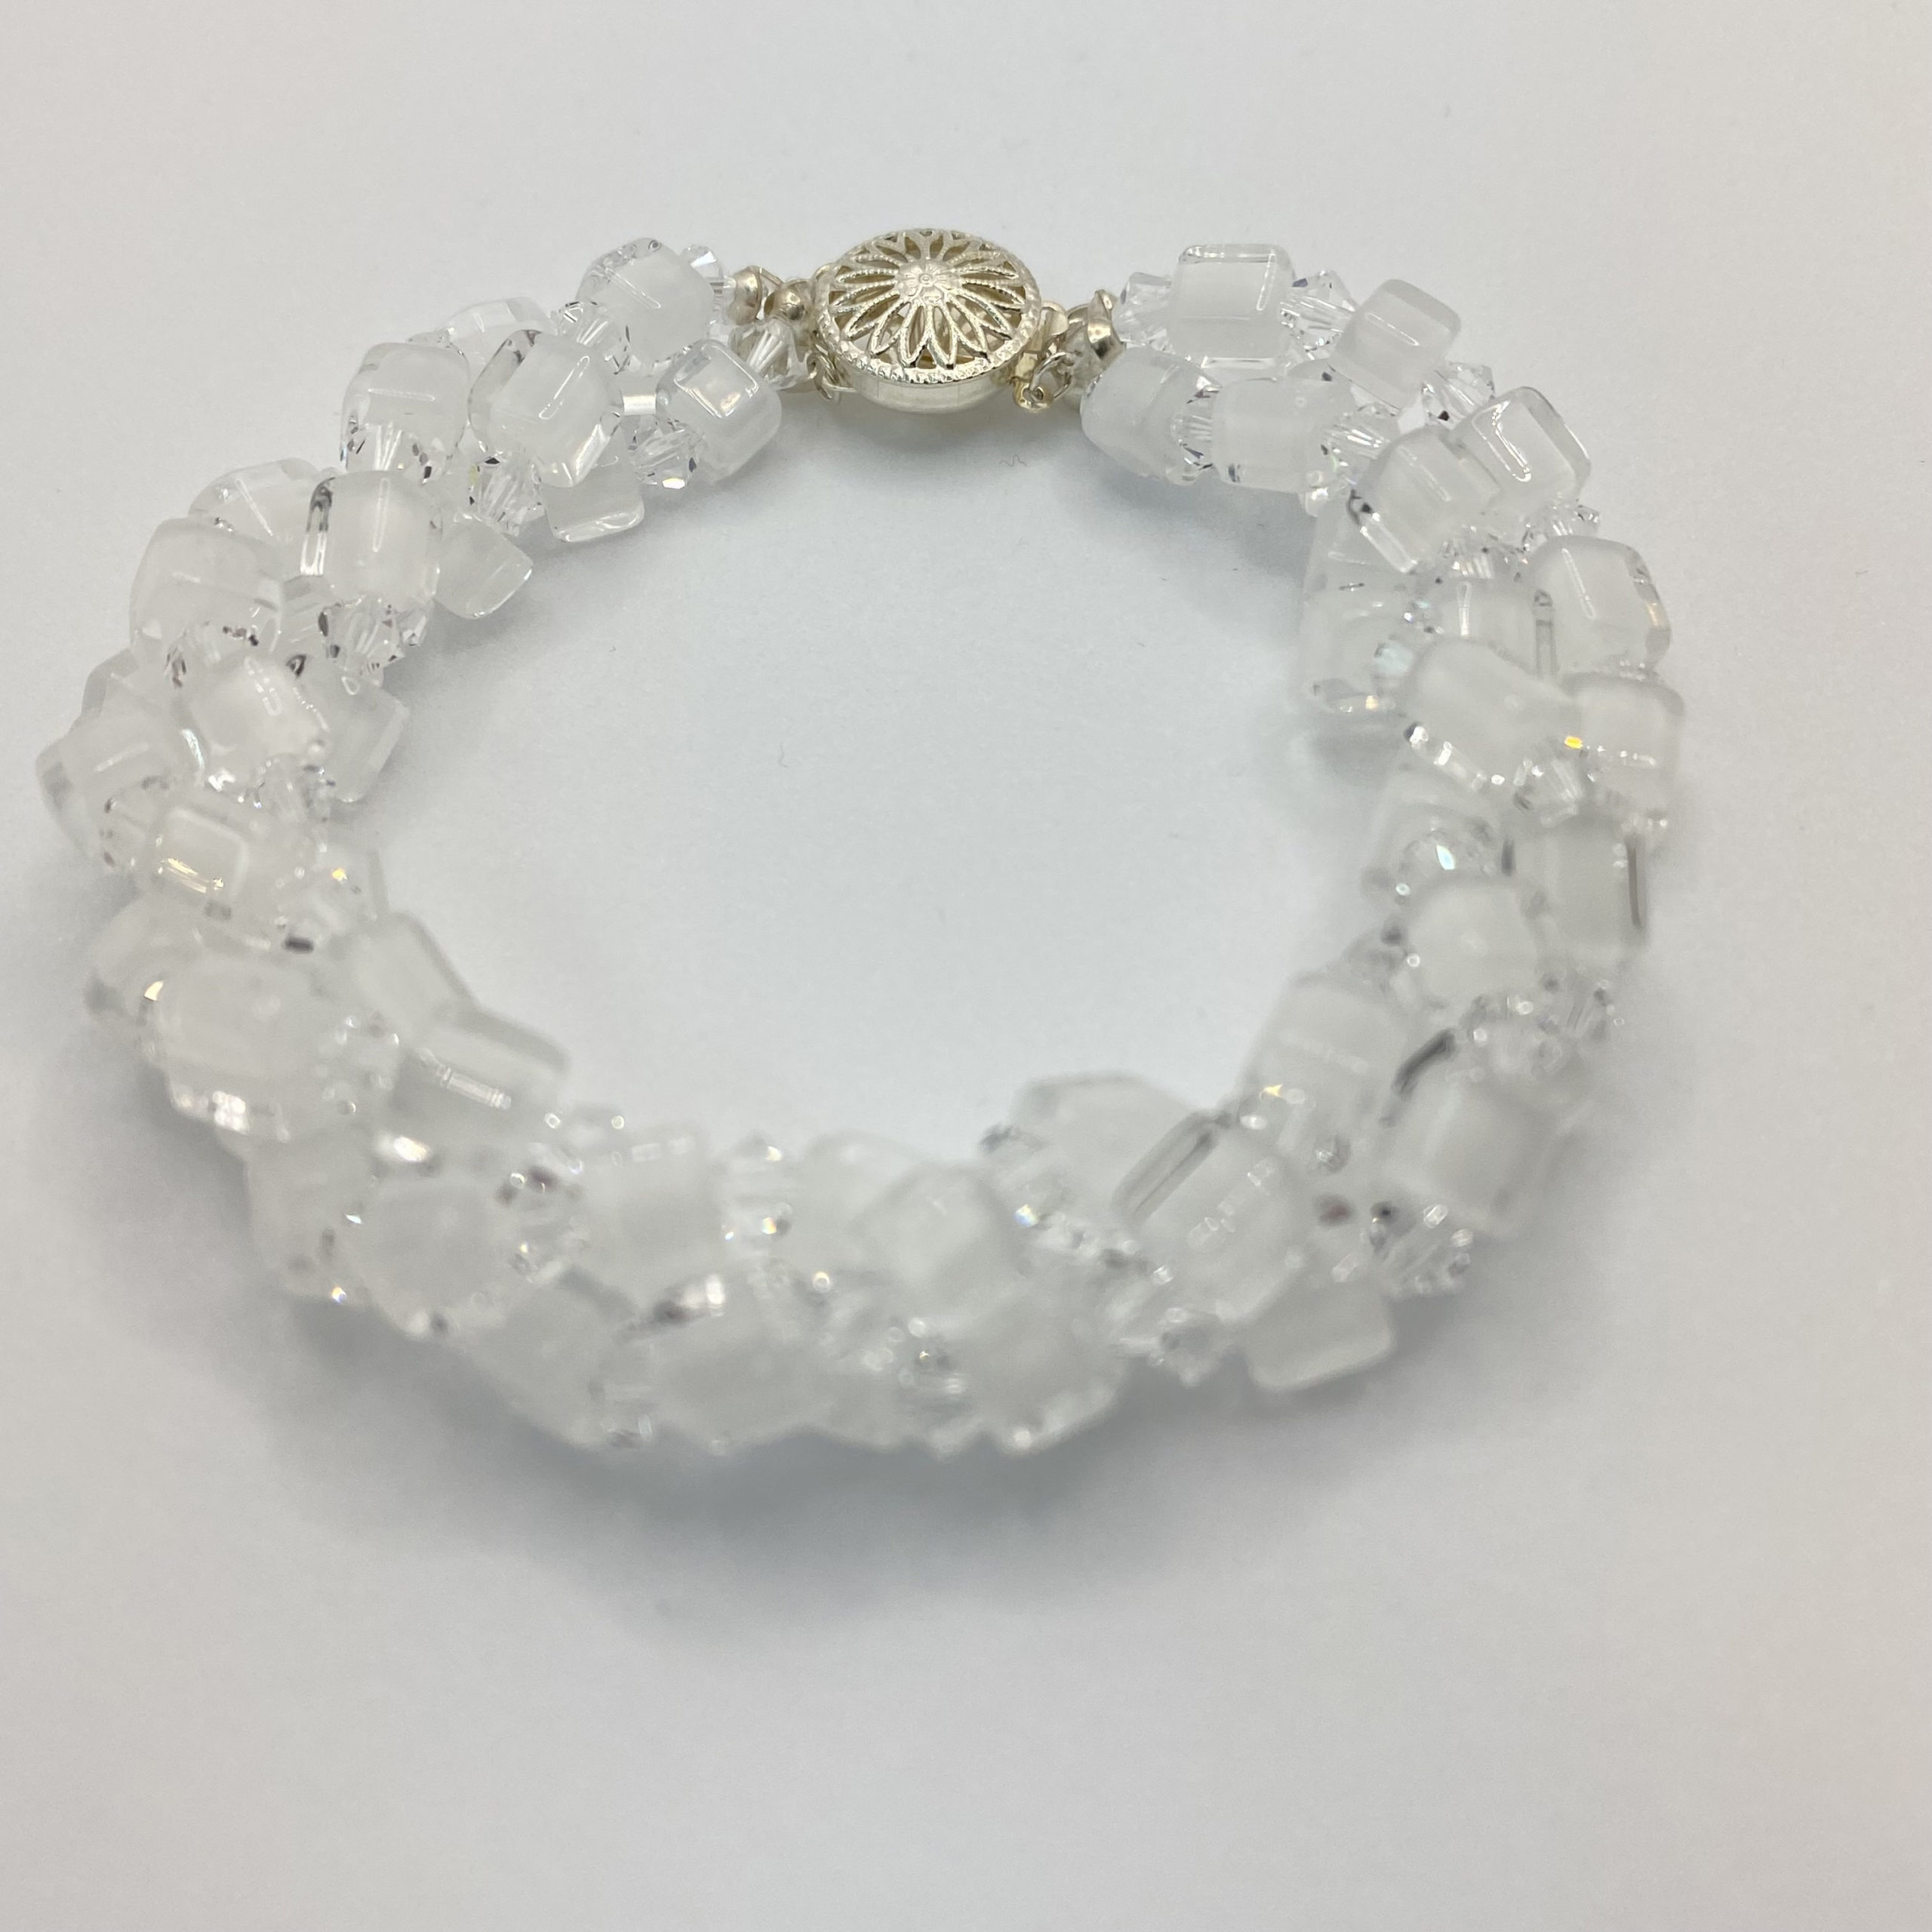 White Crackle Quartz Large Bead Crystal Bracelet for 